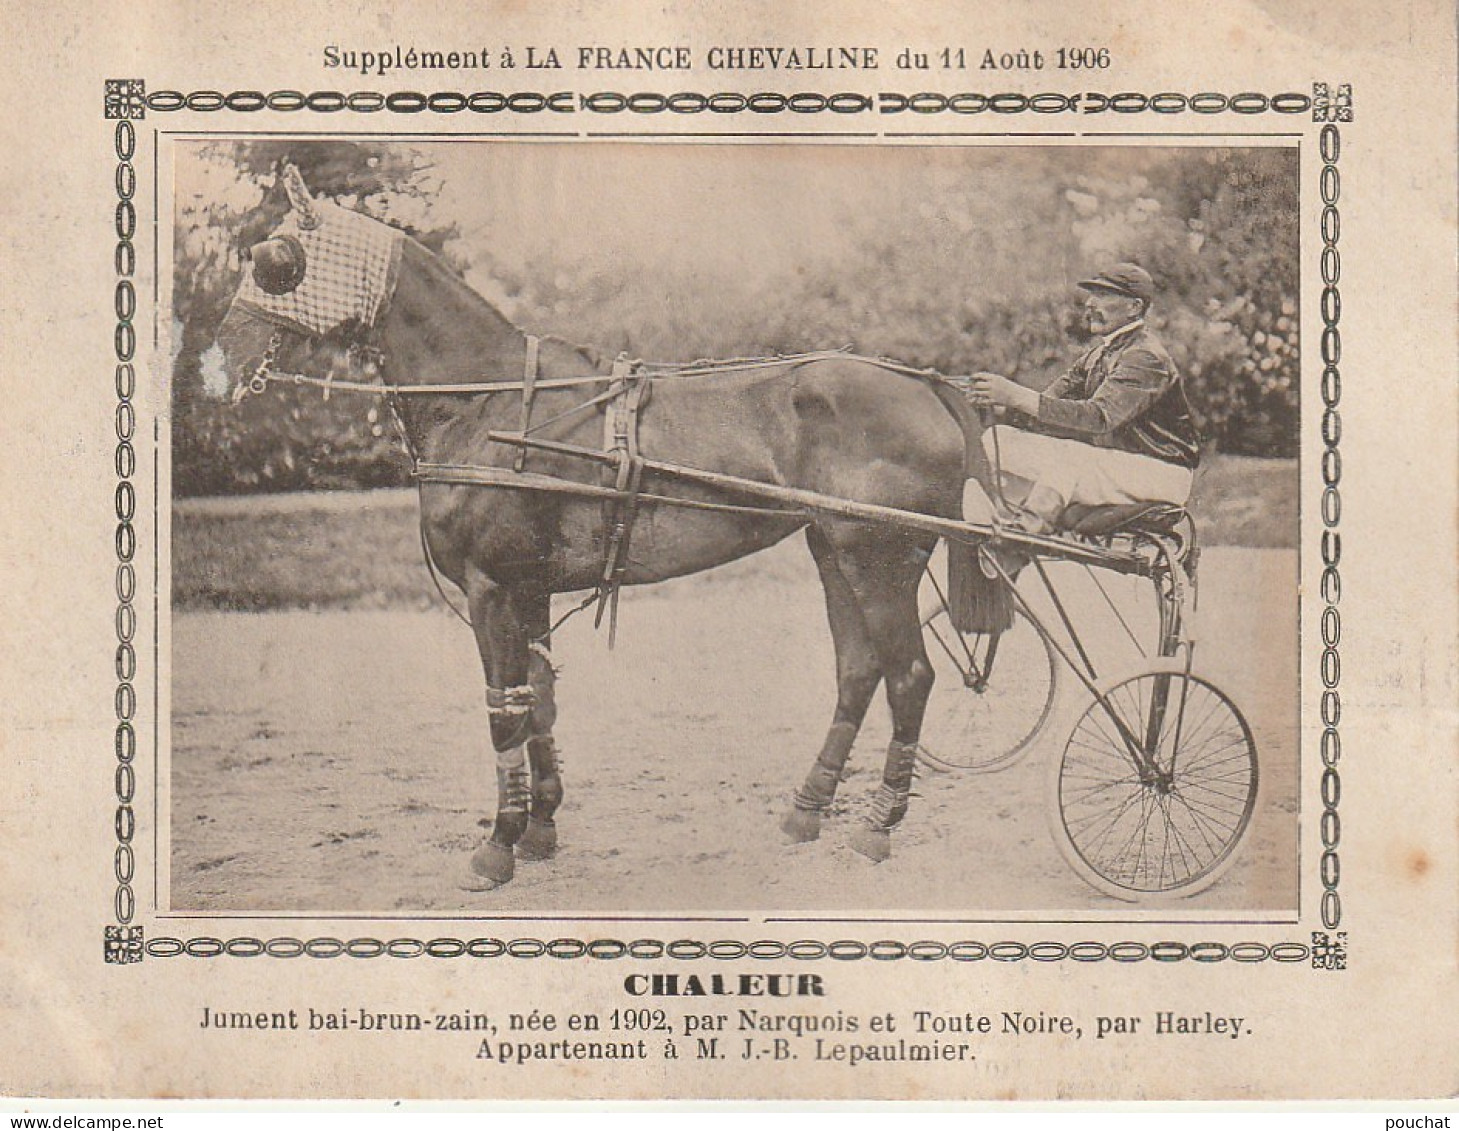 AA+ - " CHALEUR " - JUMENT APPARTENANT A  M. J. B. LEPAULMIER - SUPPLEMENT " FRANCE CHEVALINE " ( 11 AOUT 1906 ) - SULKY - Paardensport